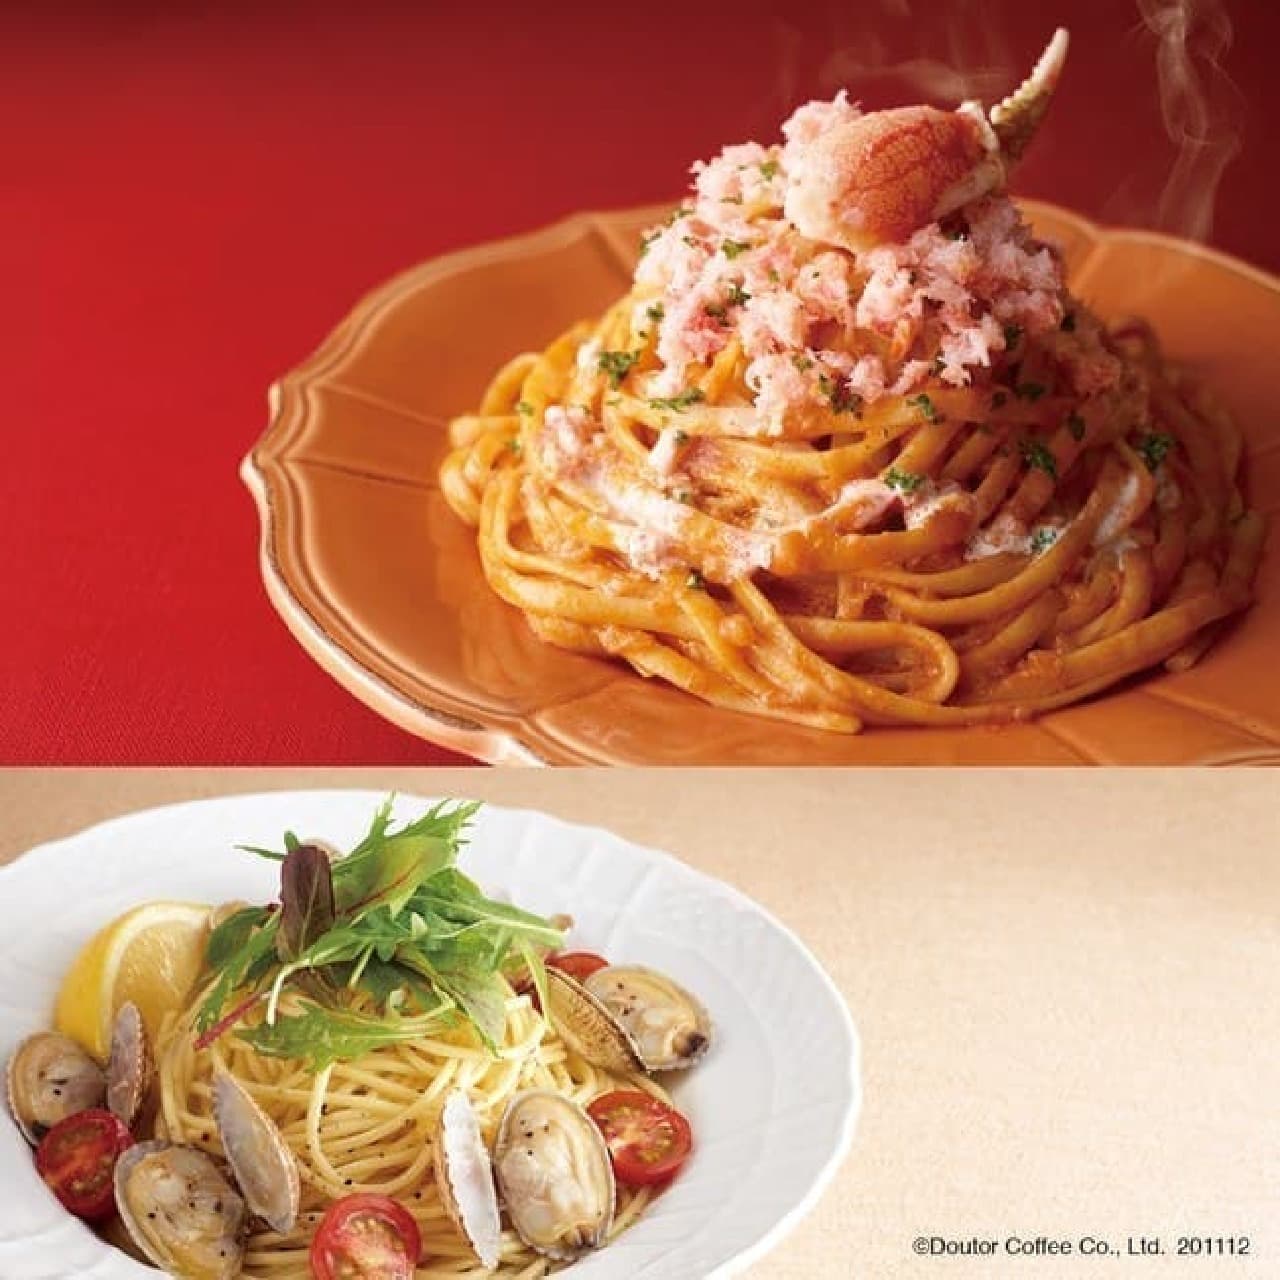 Excelsior Cafe "Luxury Pasta Crab Tomato Cream" and "Asari and Tomato Ario Orio"